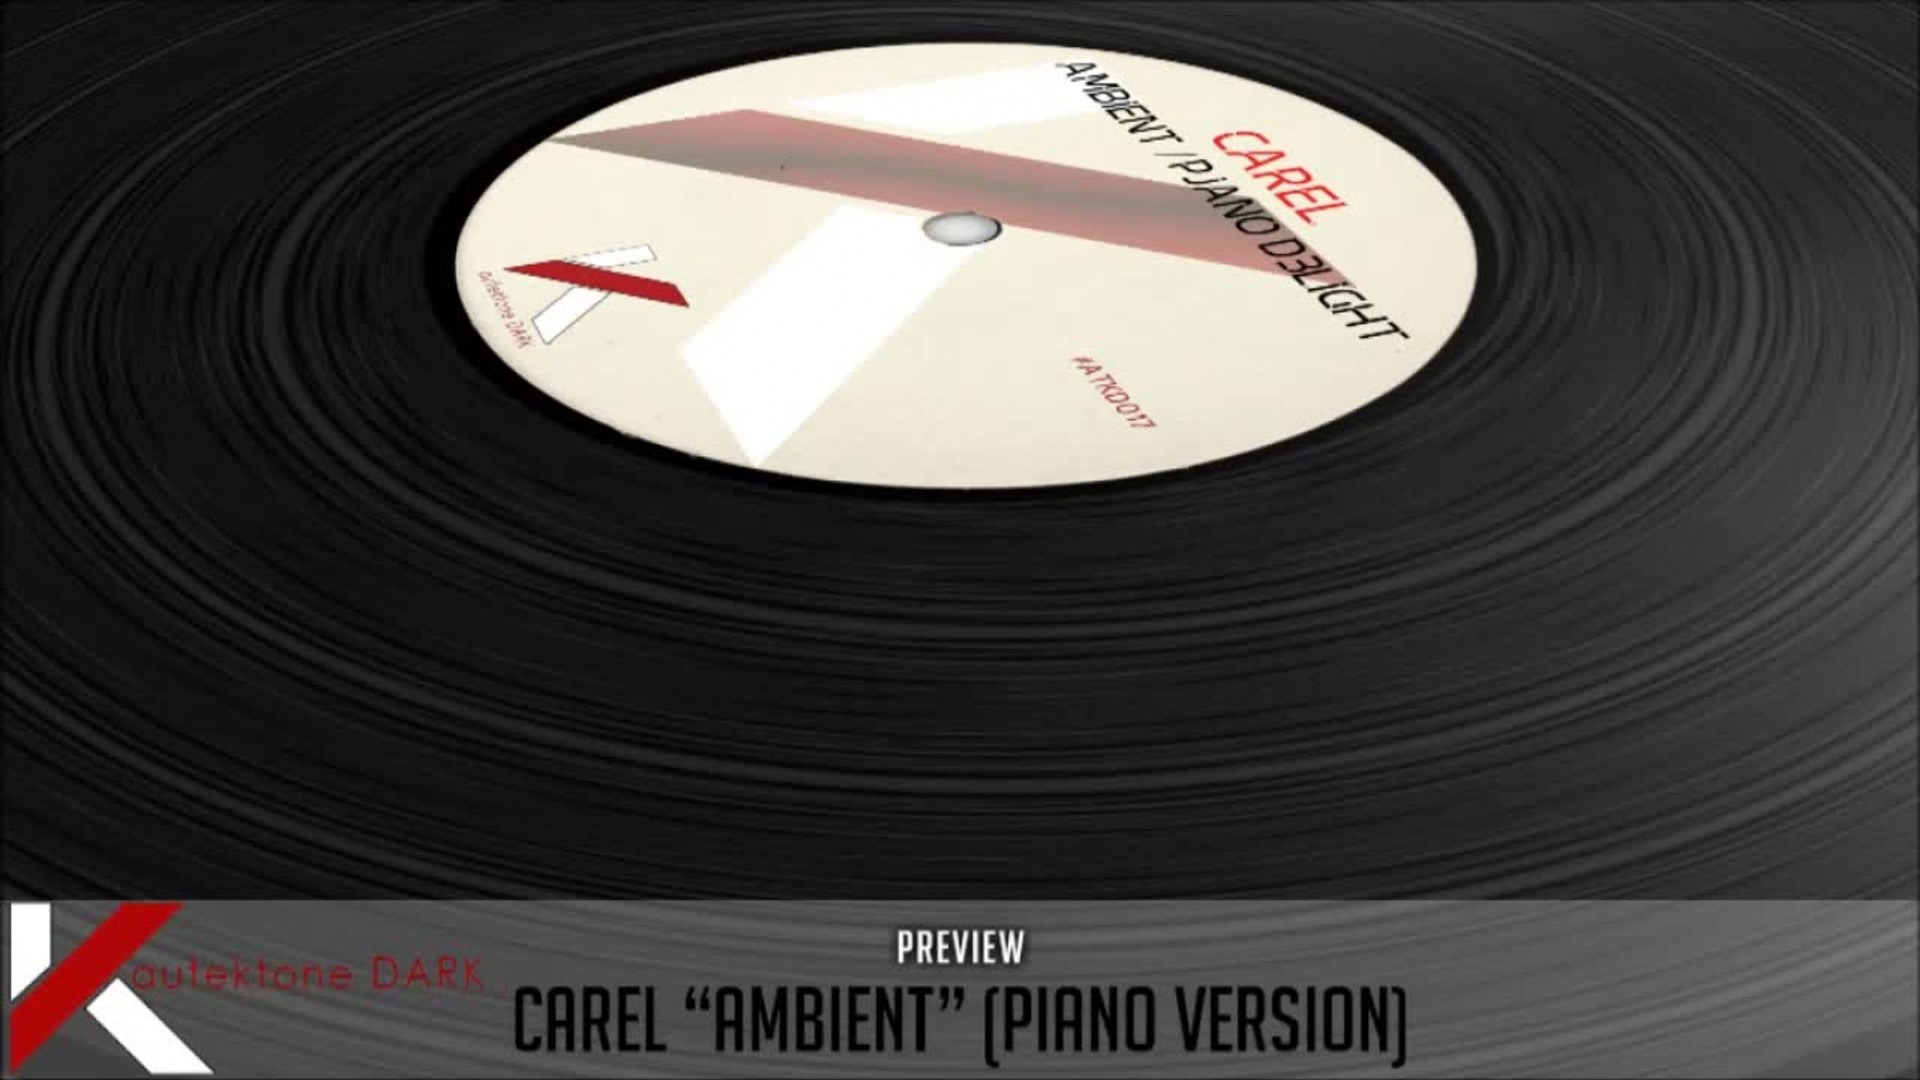 Carel - Ambient (Piano Version) - Official Preview (Autektone Dark)